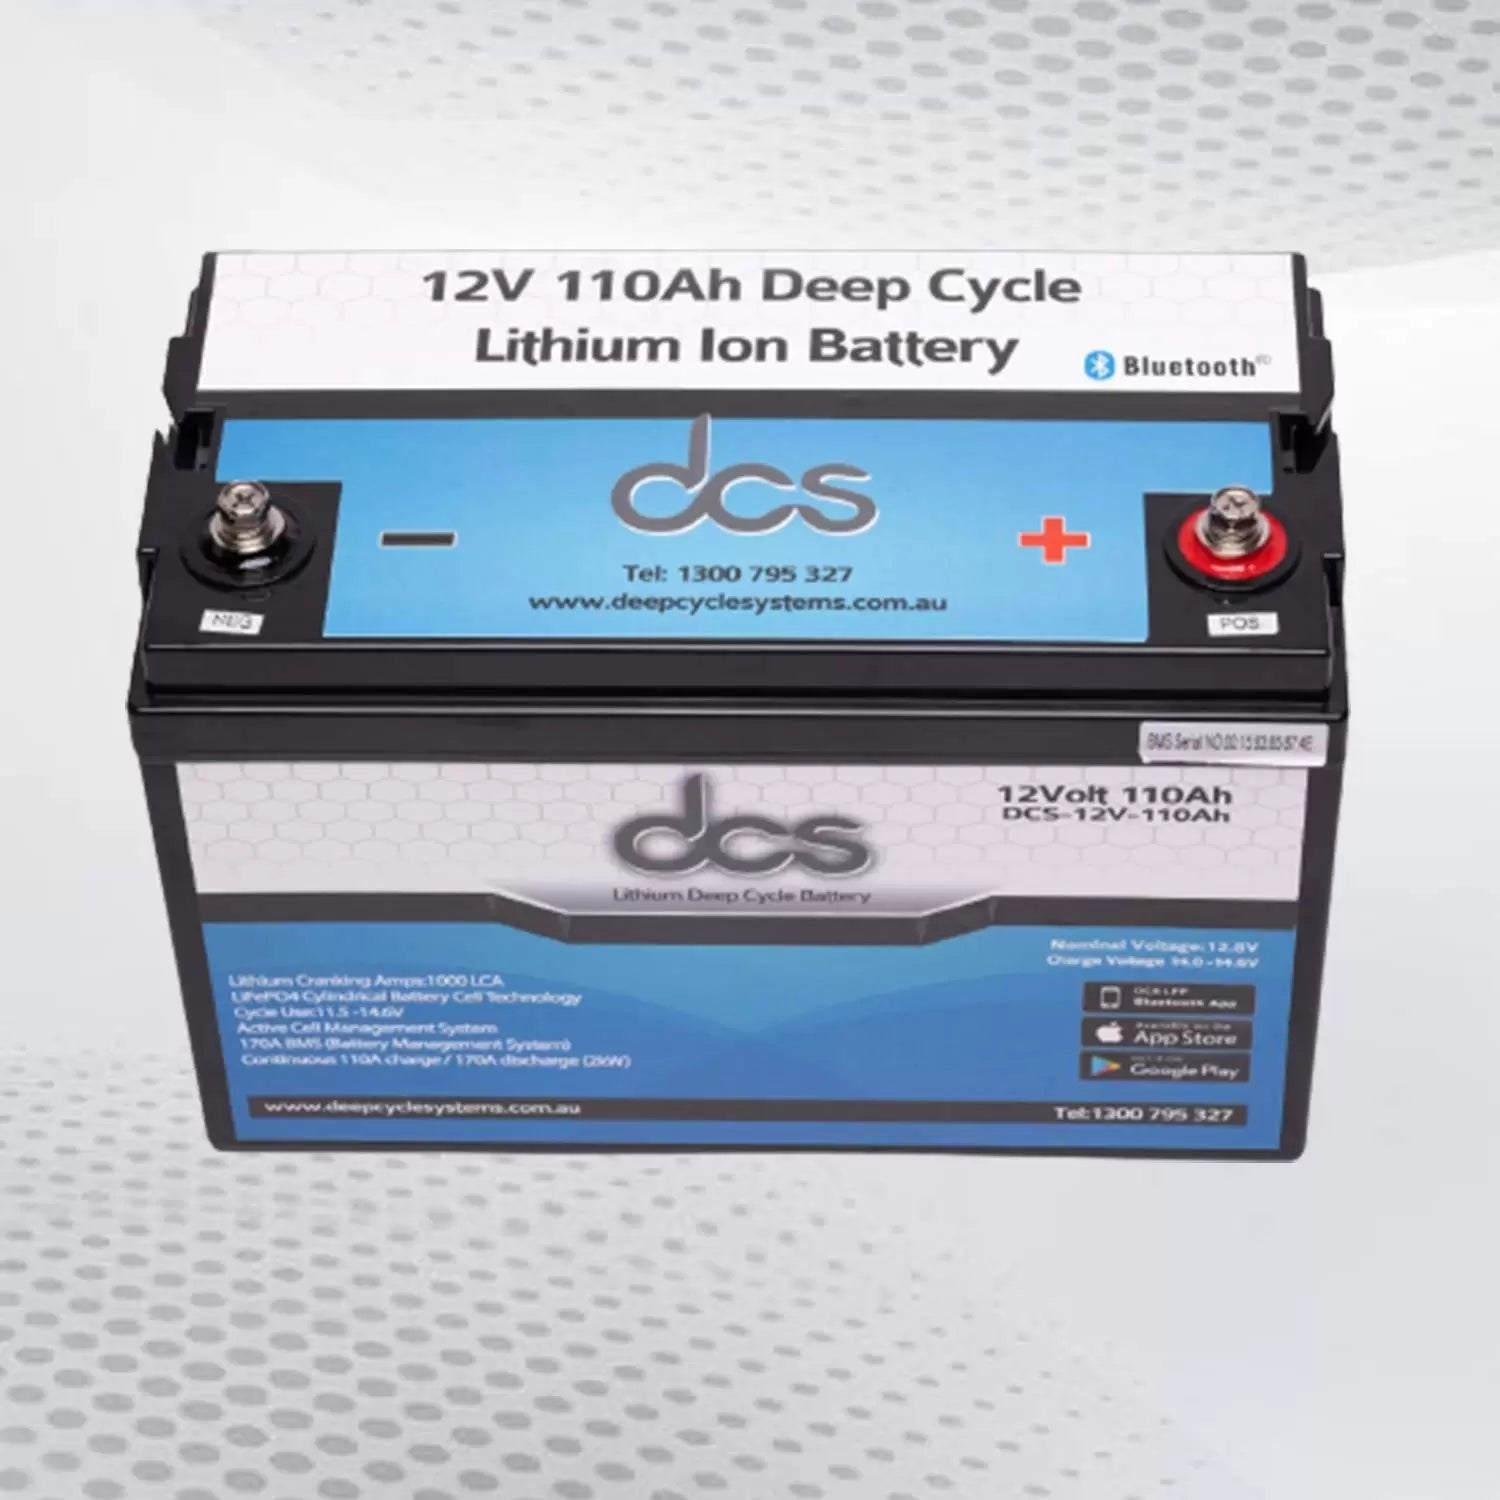 DCS 12V 110AH (LITHIUM) Deep Cycle Systems | Deep Cycle Systems